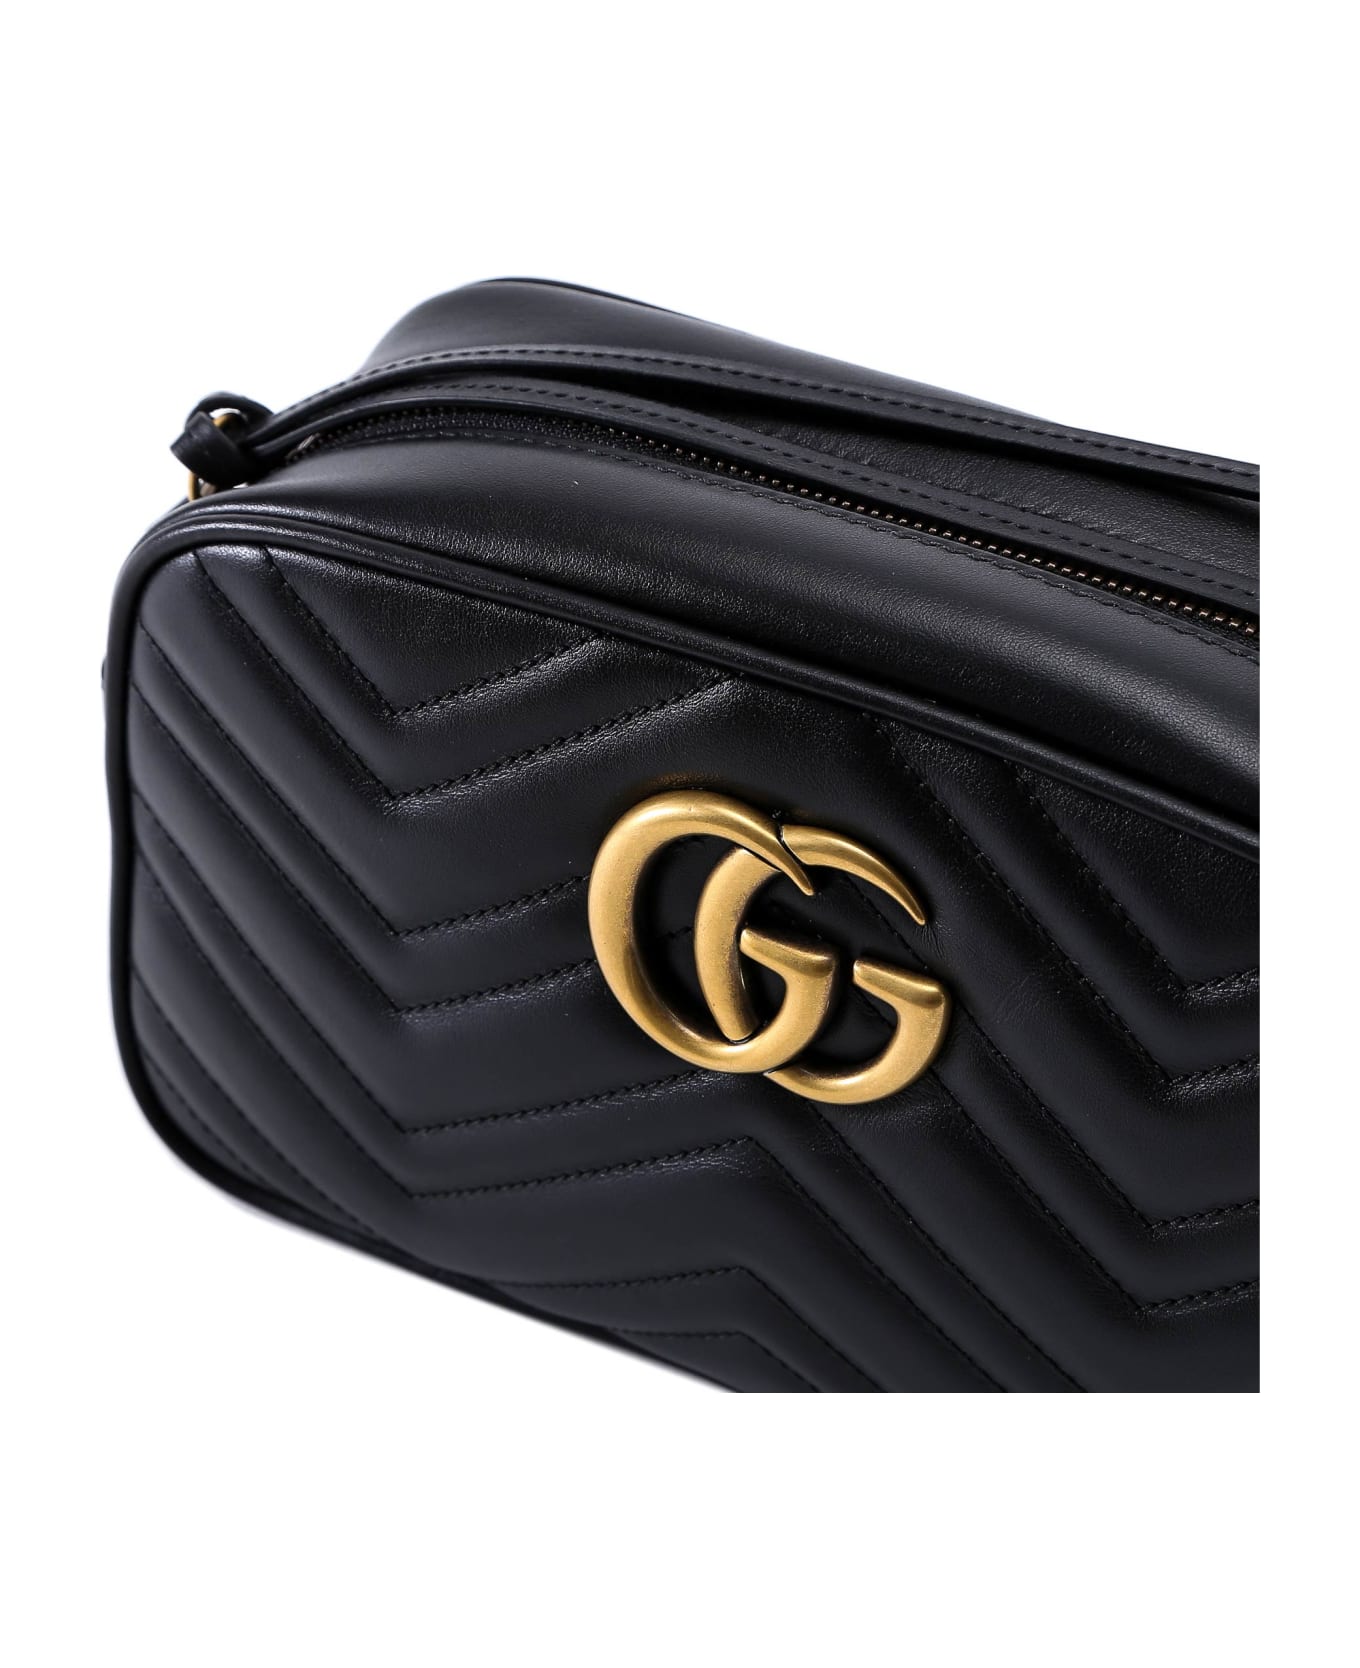 Gucci Gg Marmont Shoulder Bag - Nero